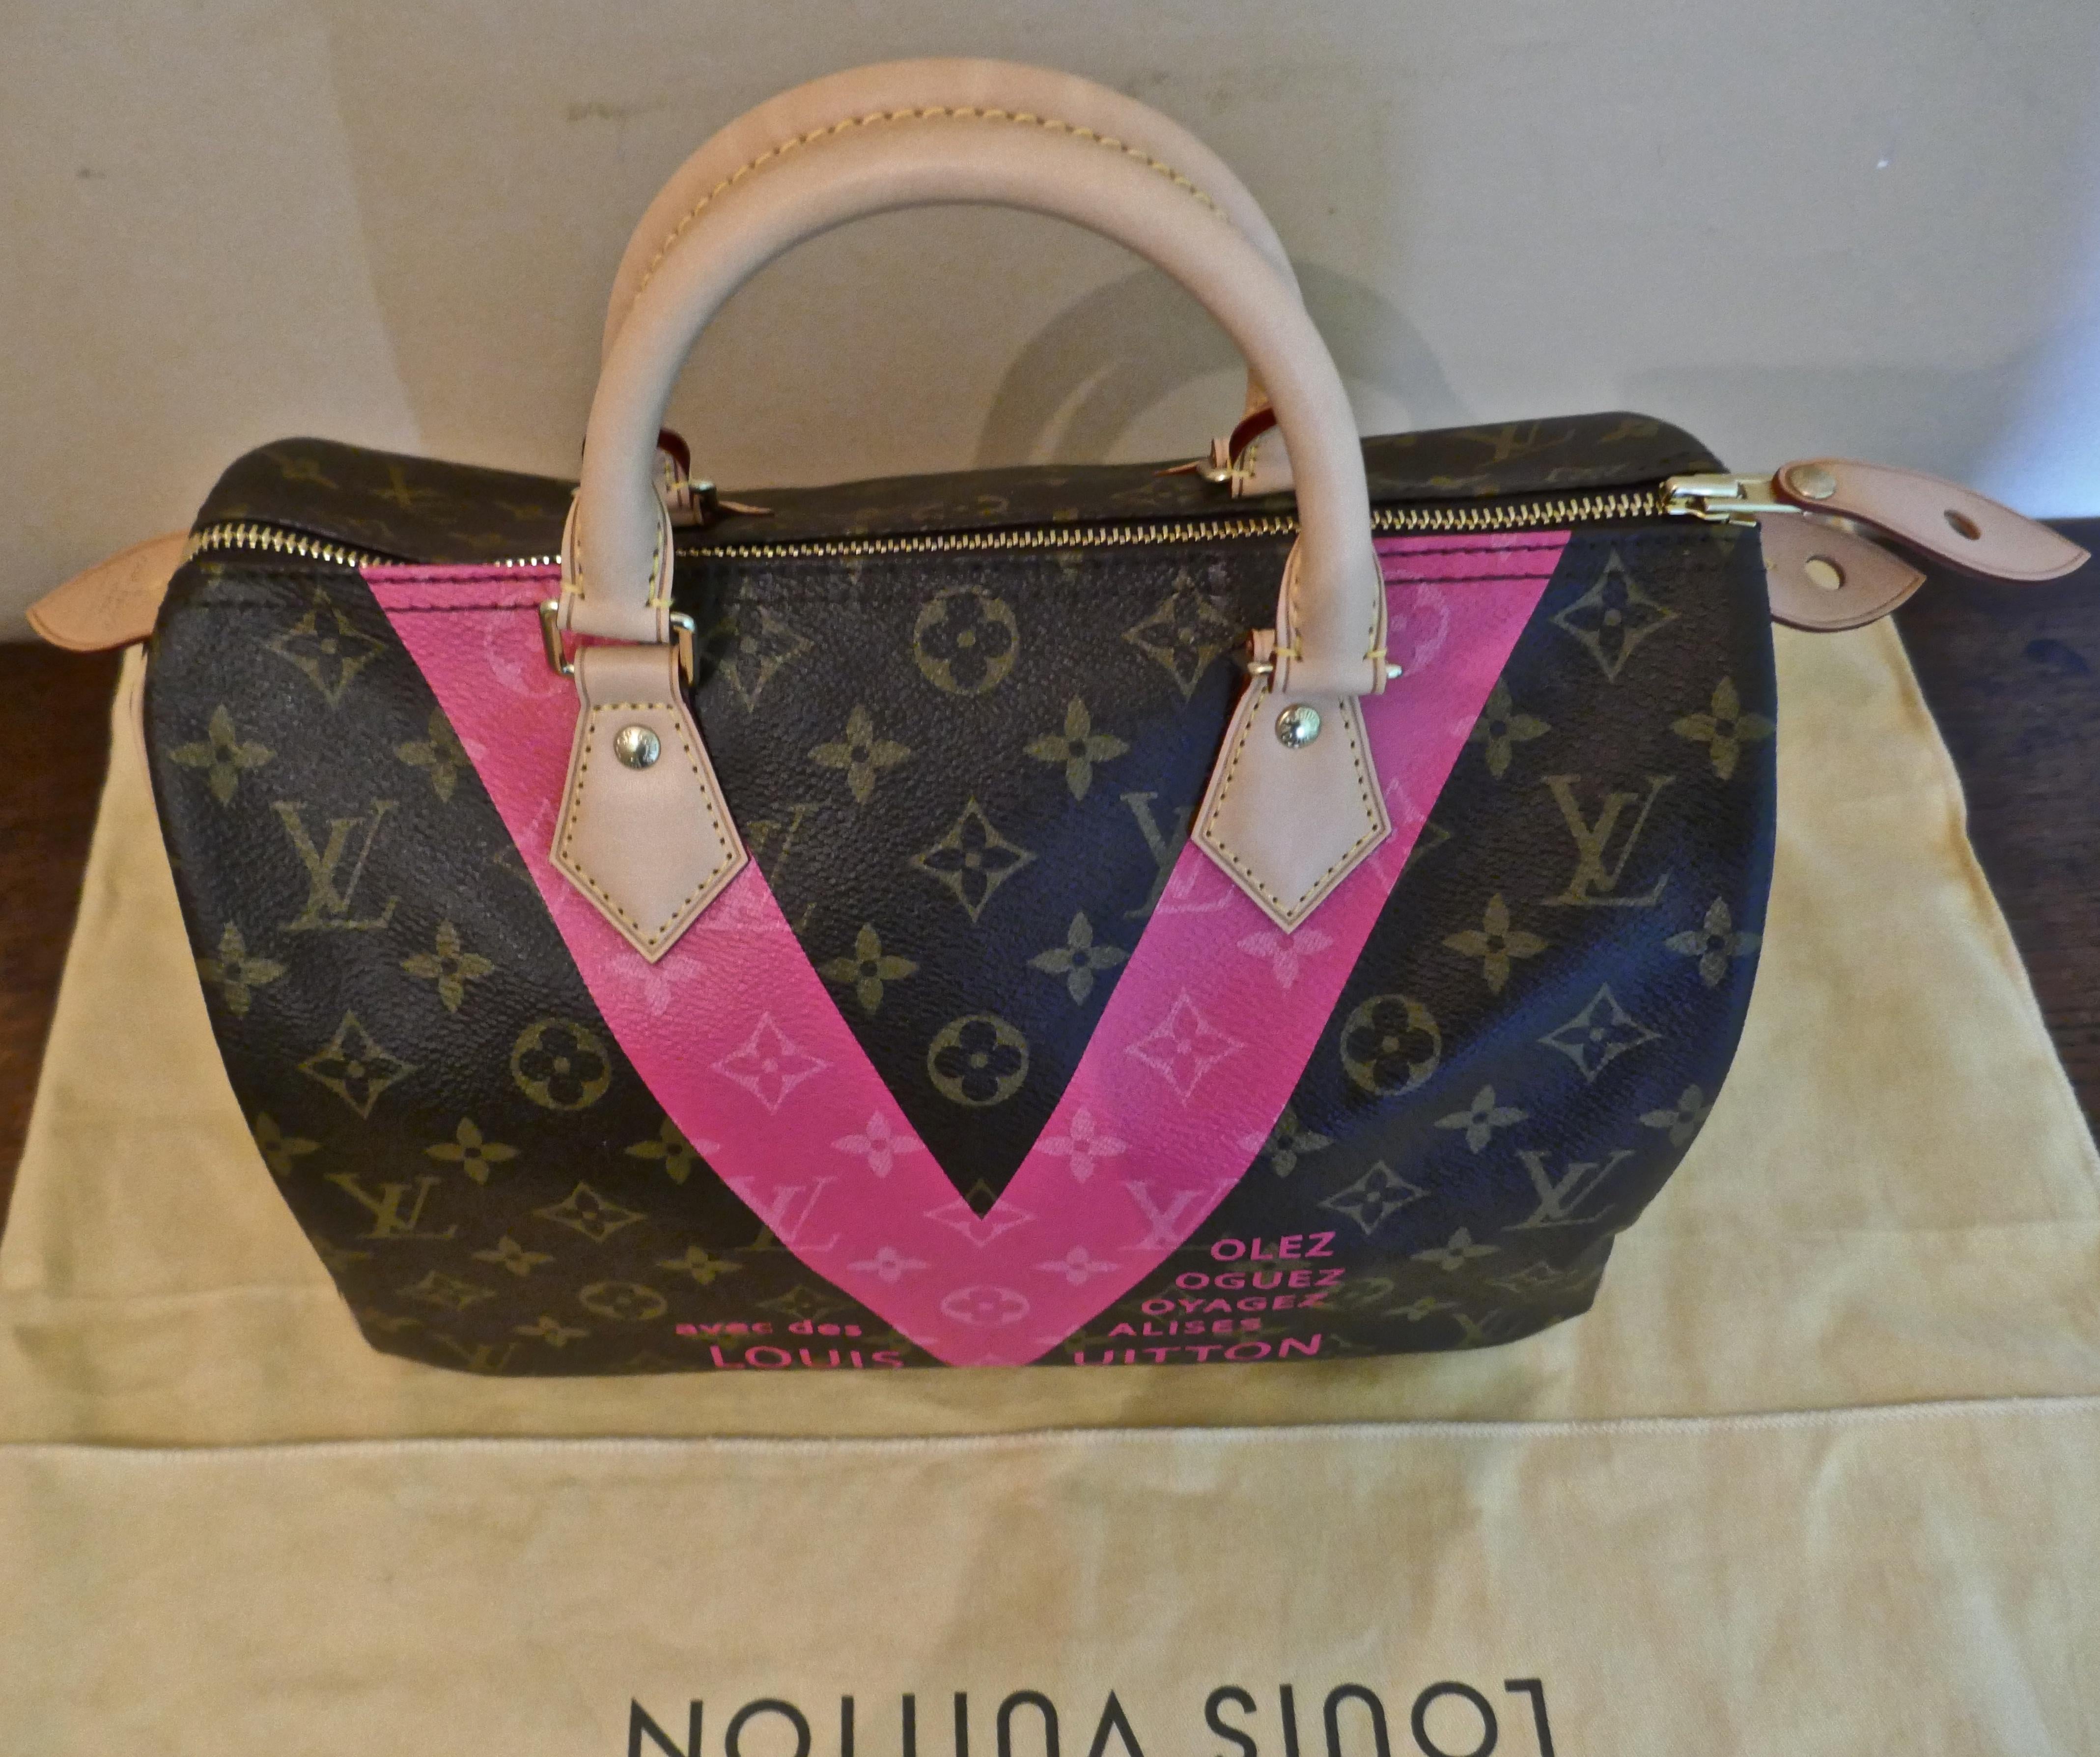 Black Louis Vuitton Speedy 30 Limited Edition Grenade V Monogram Handbag.